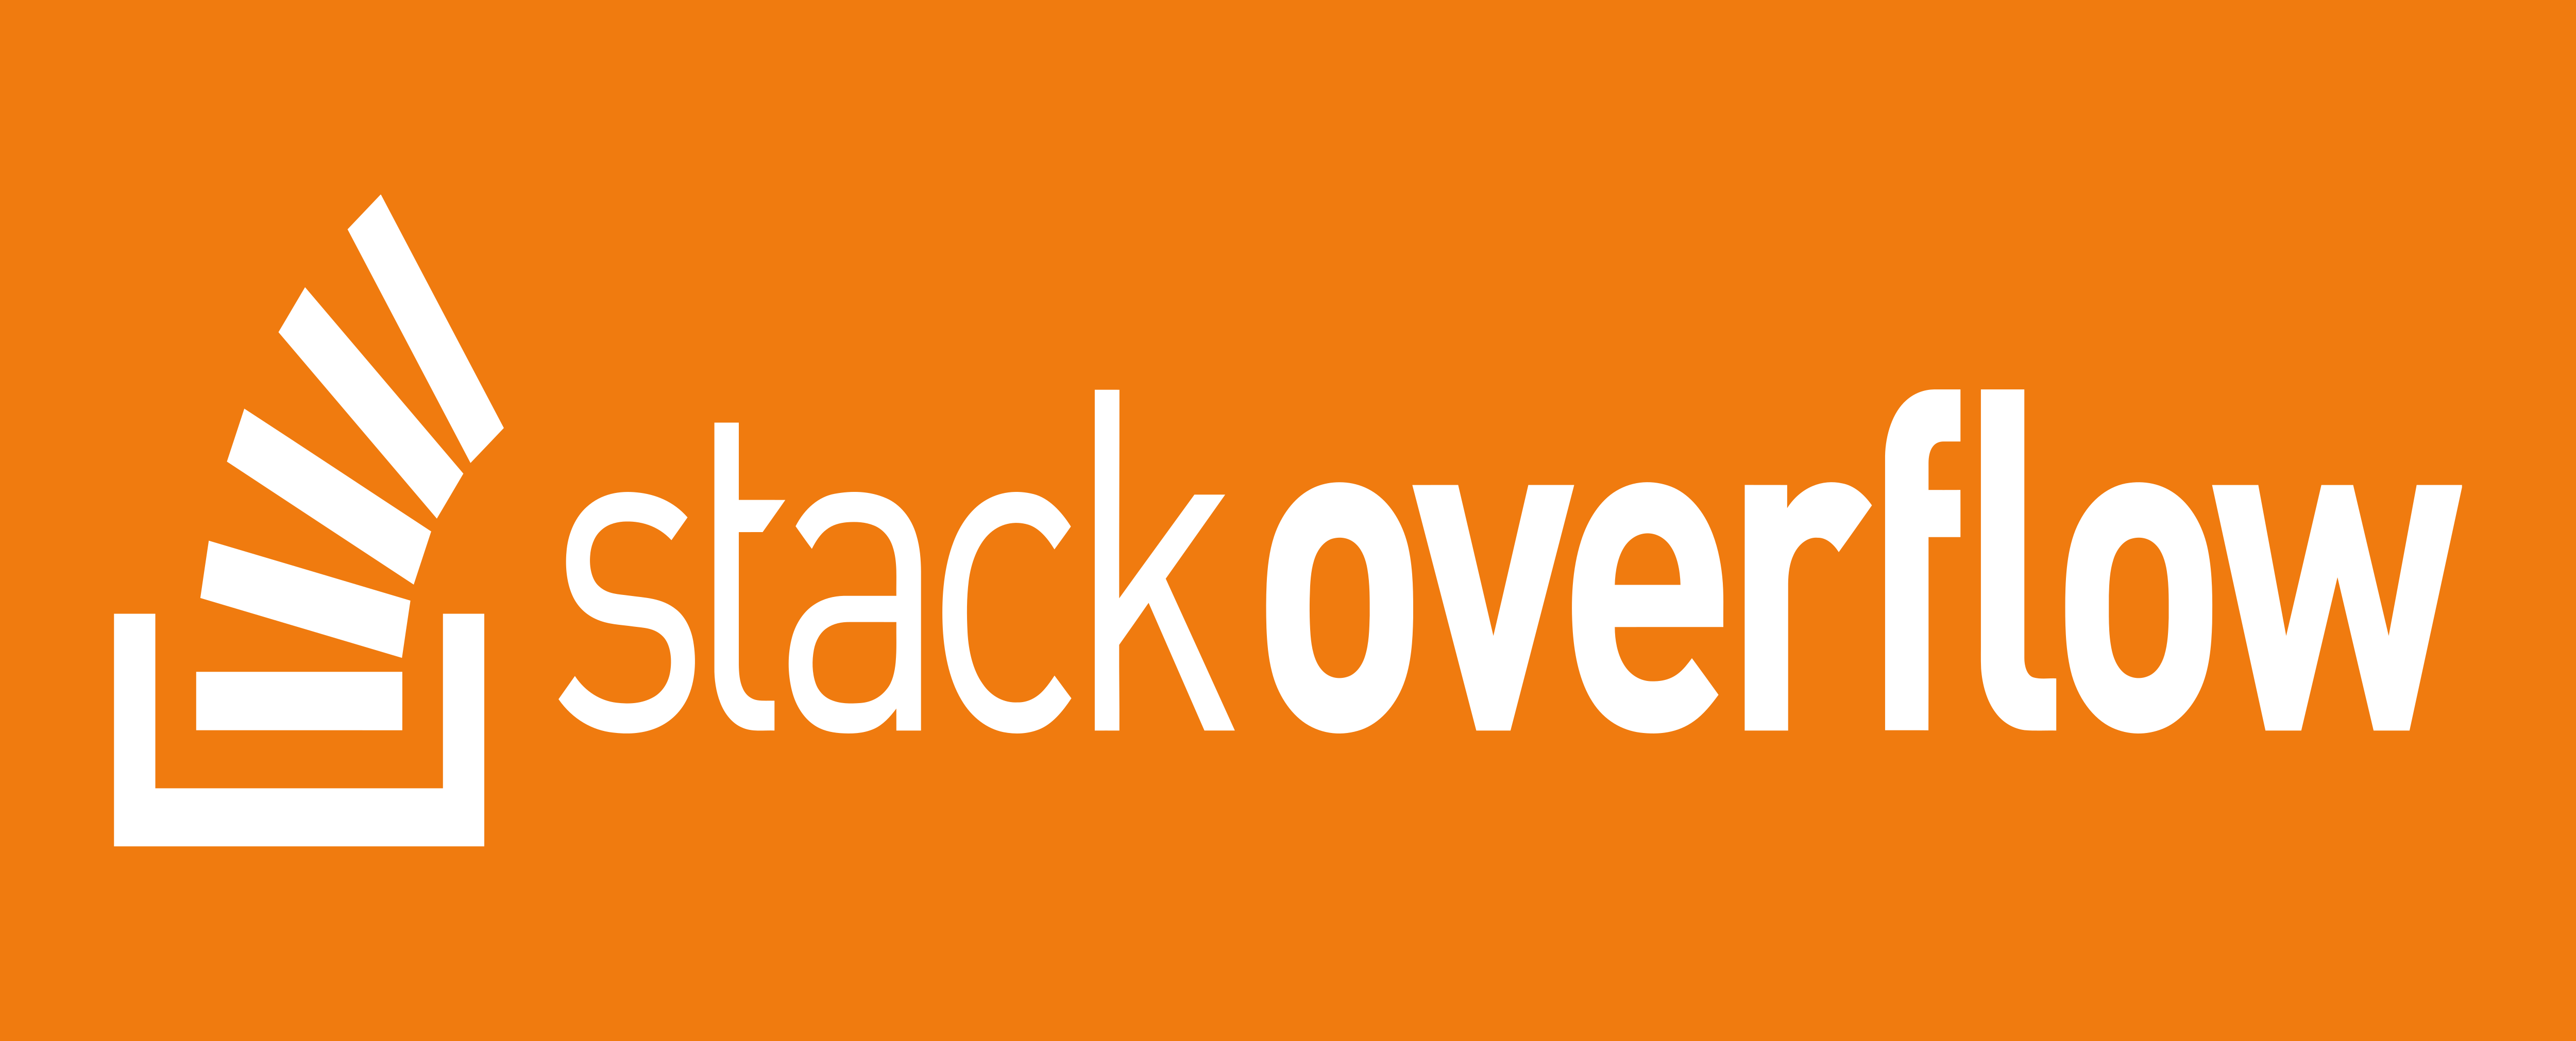 Stack Overflow – Logos Download